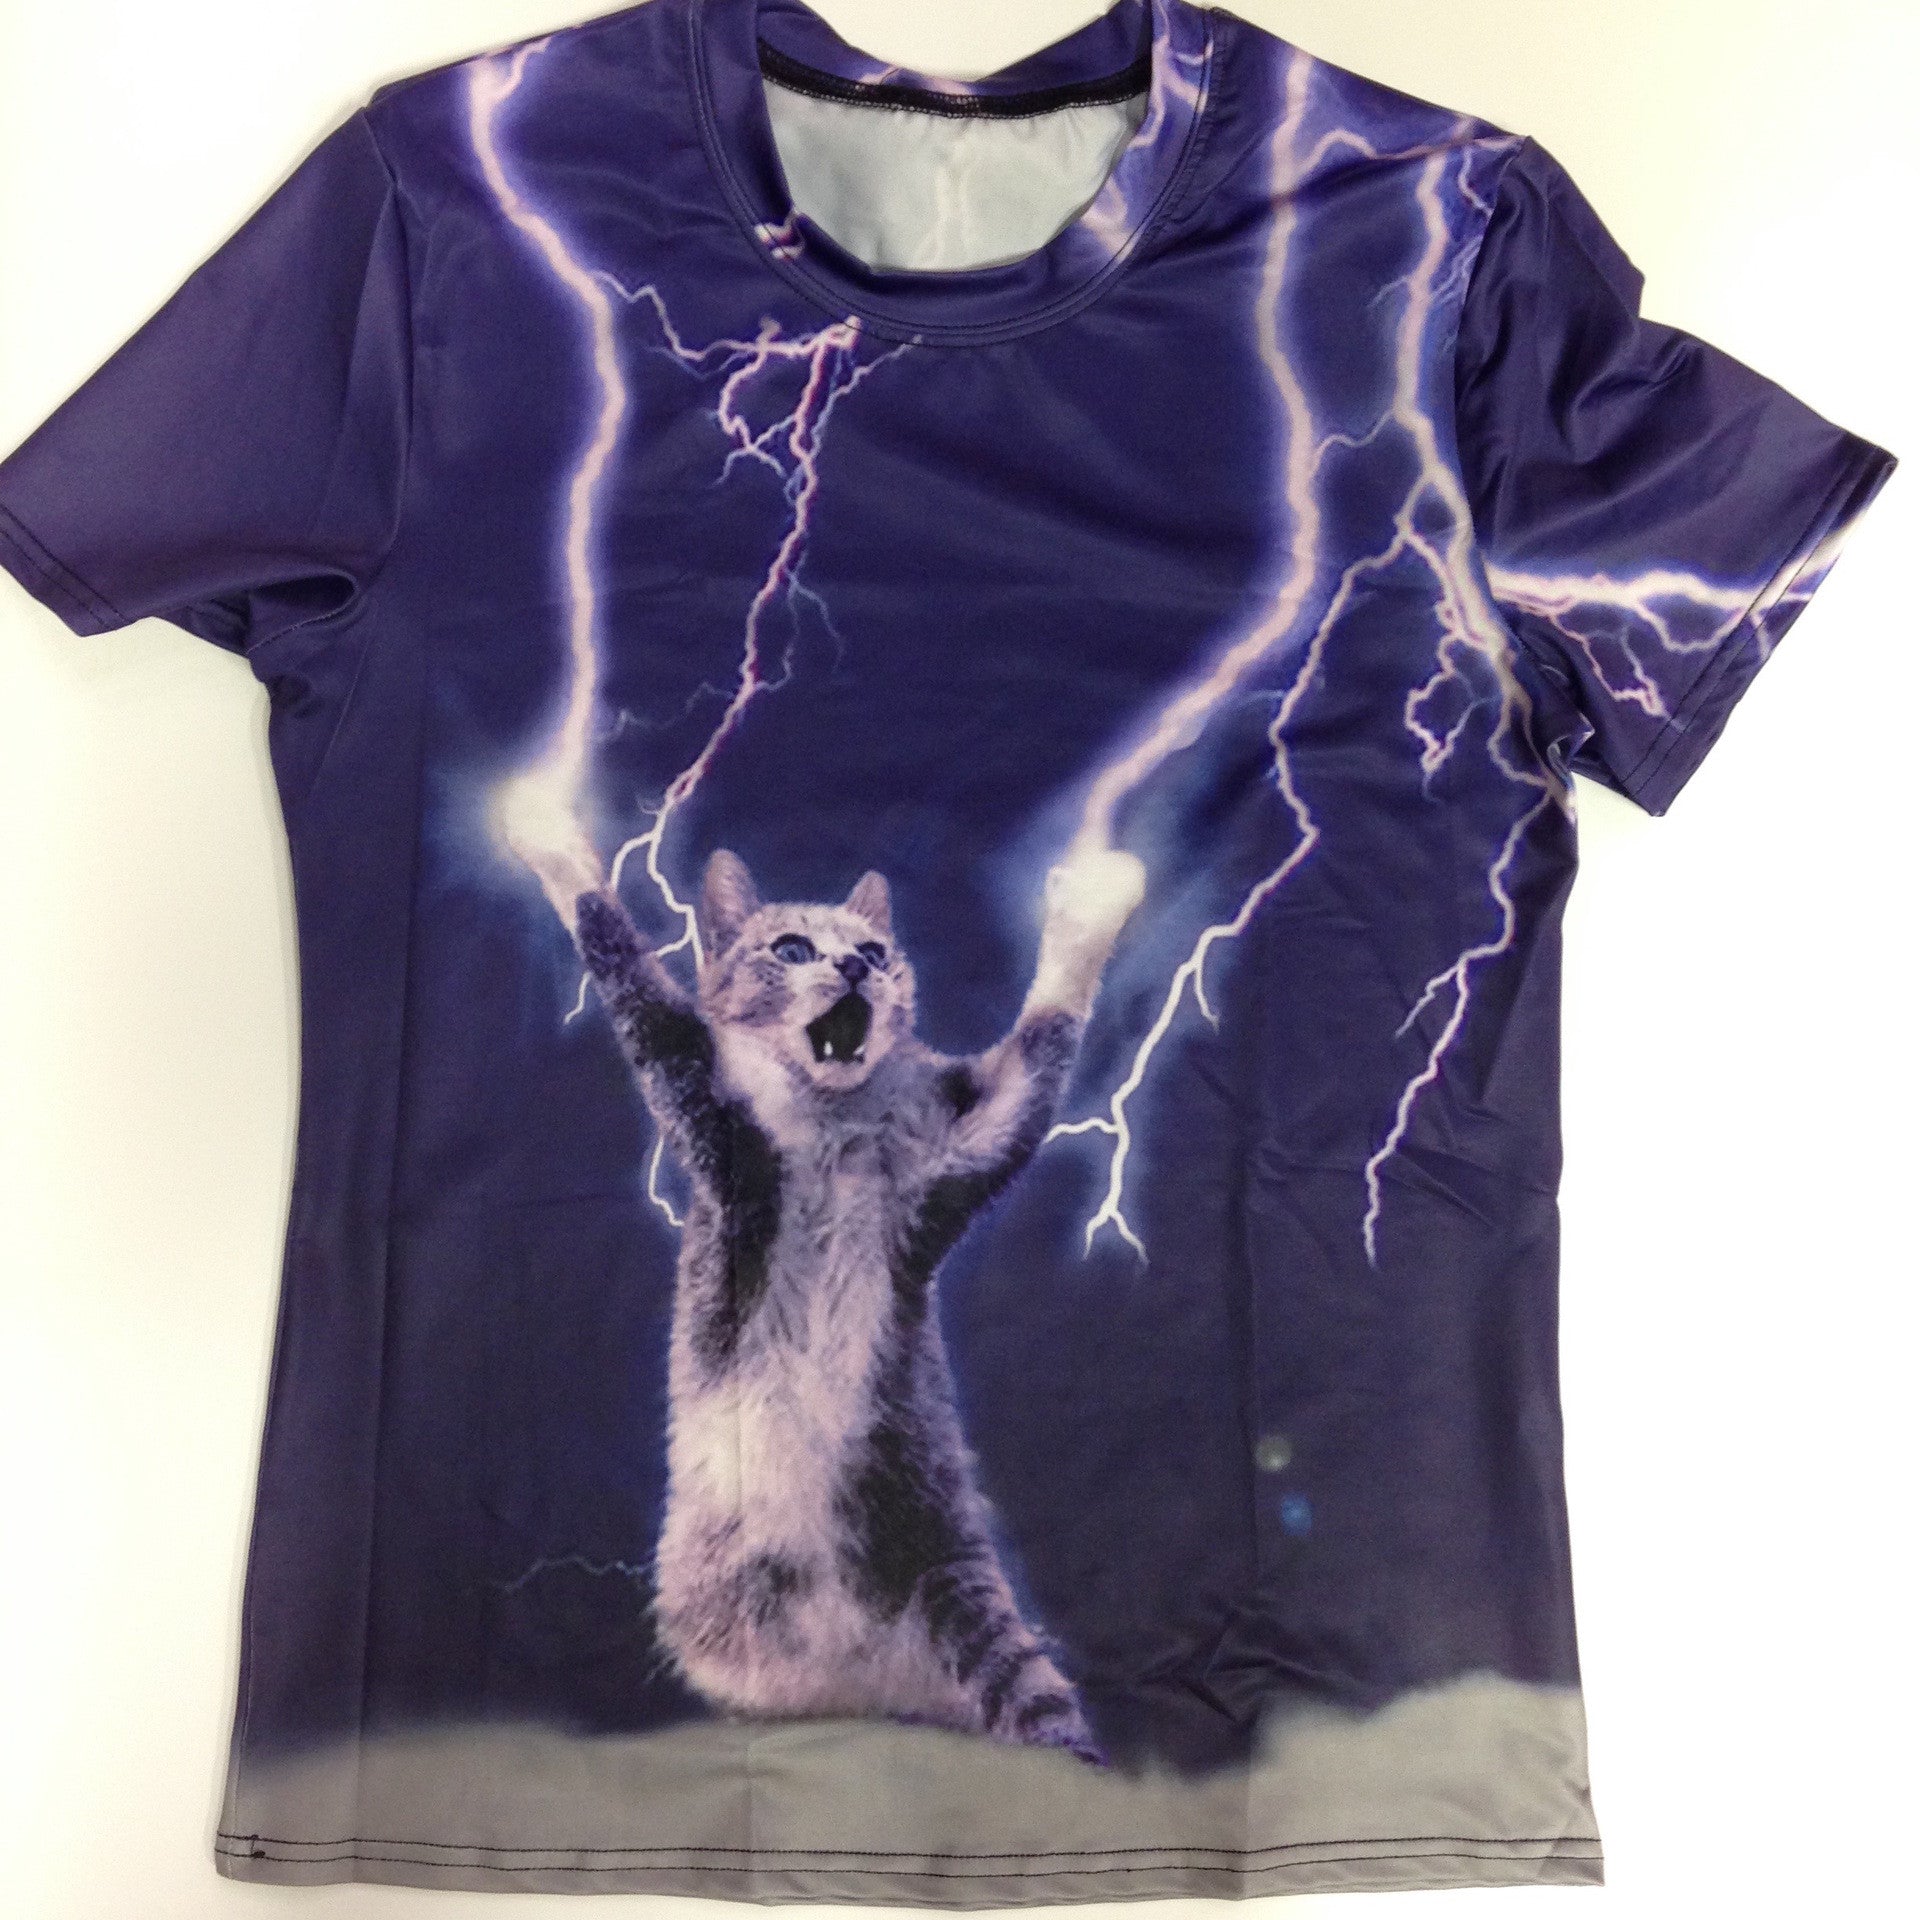 Cat Lightning T-Shirt - 88% Polyester / 12% Spandex Blend